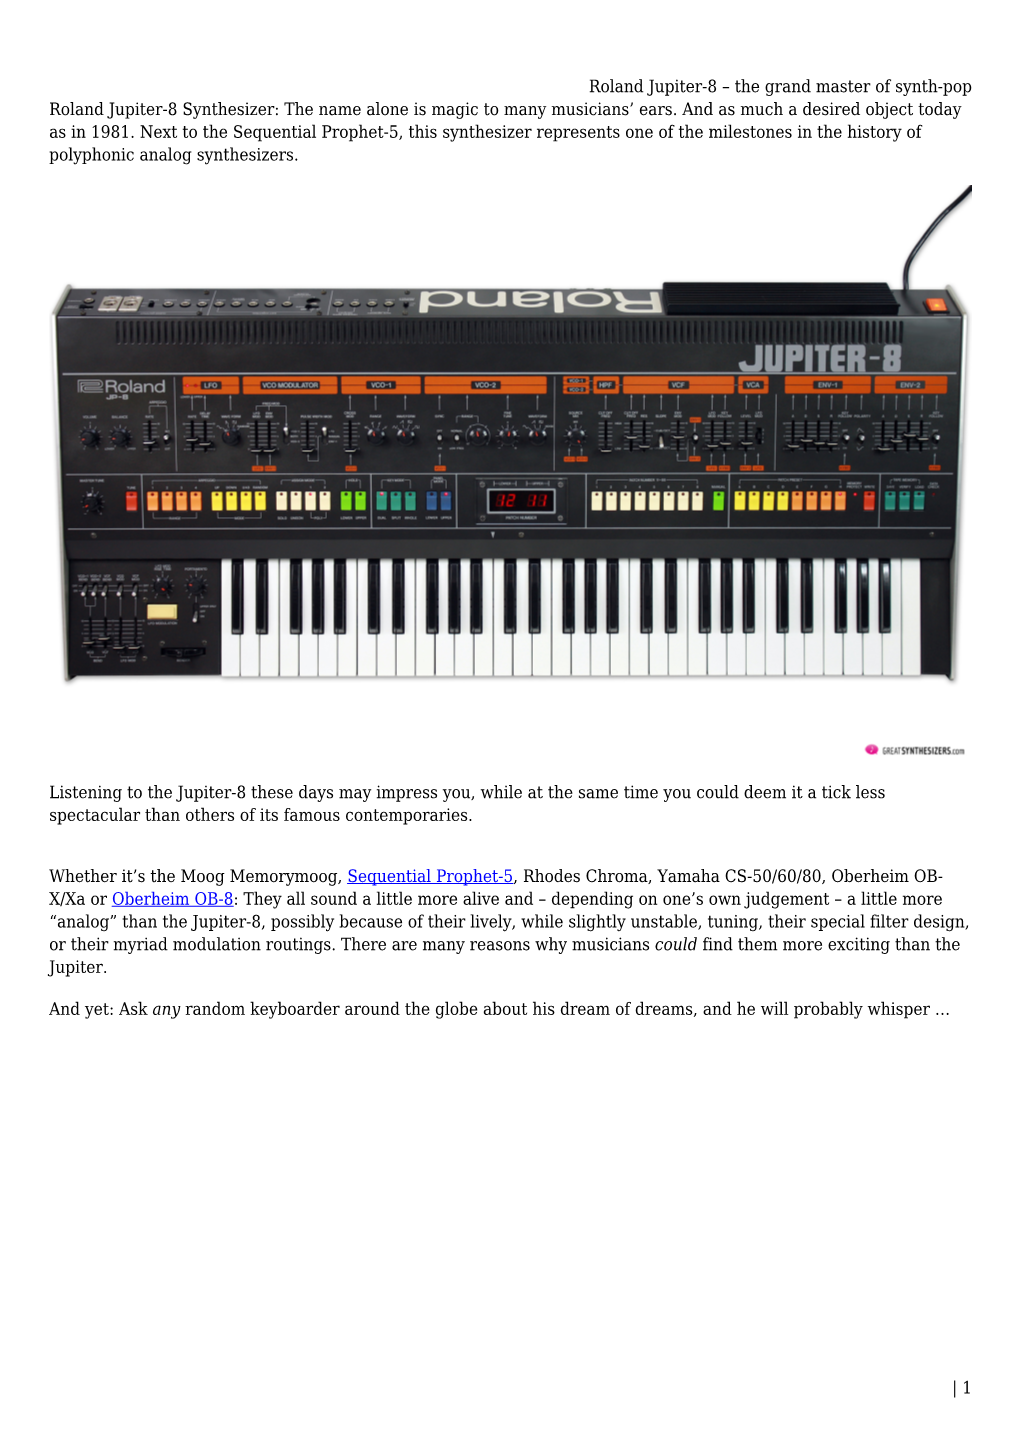 Roland Jupiter-8 &#8211; the Grand Master of Synth-Pop